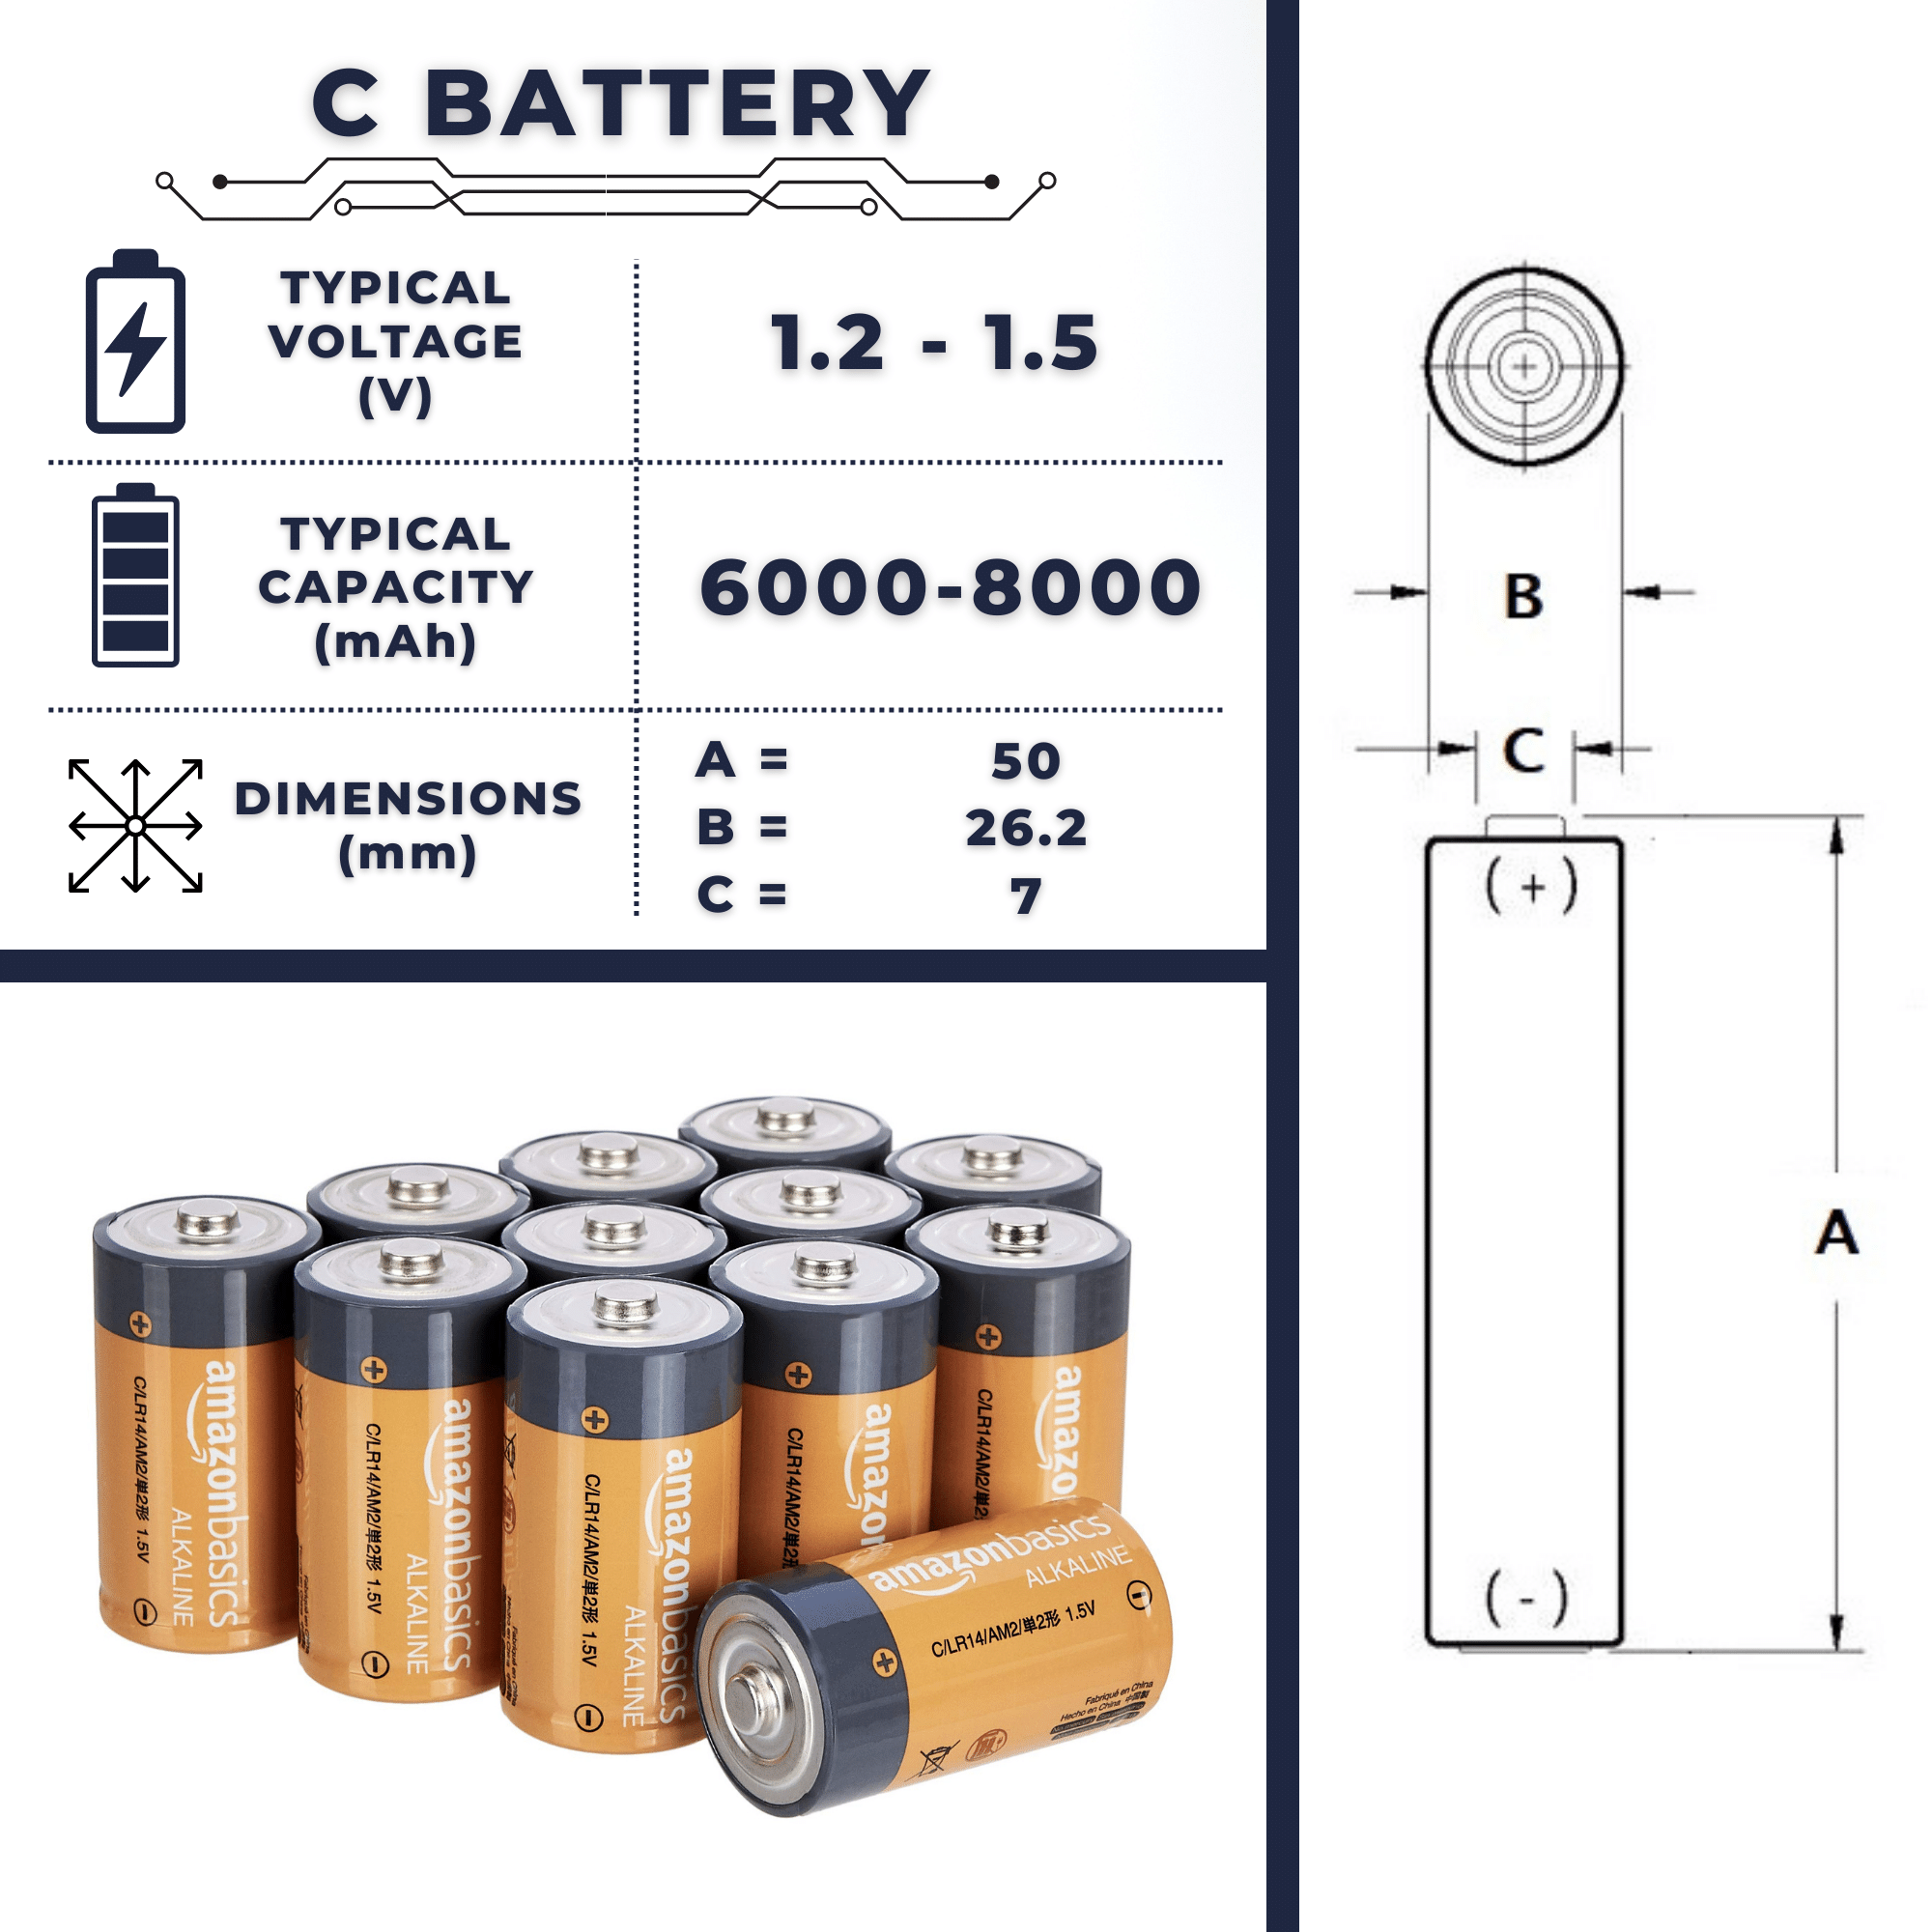 Characteristics of C Batteries